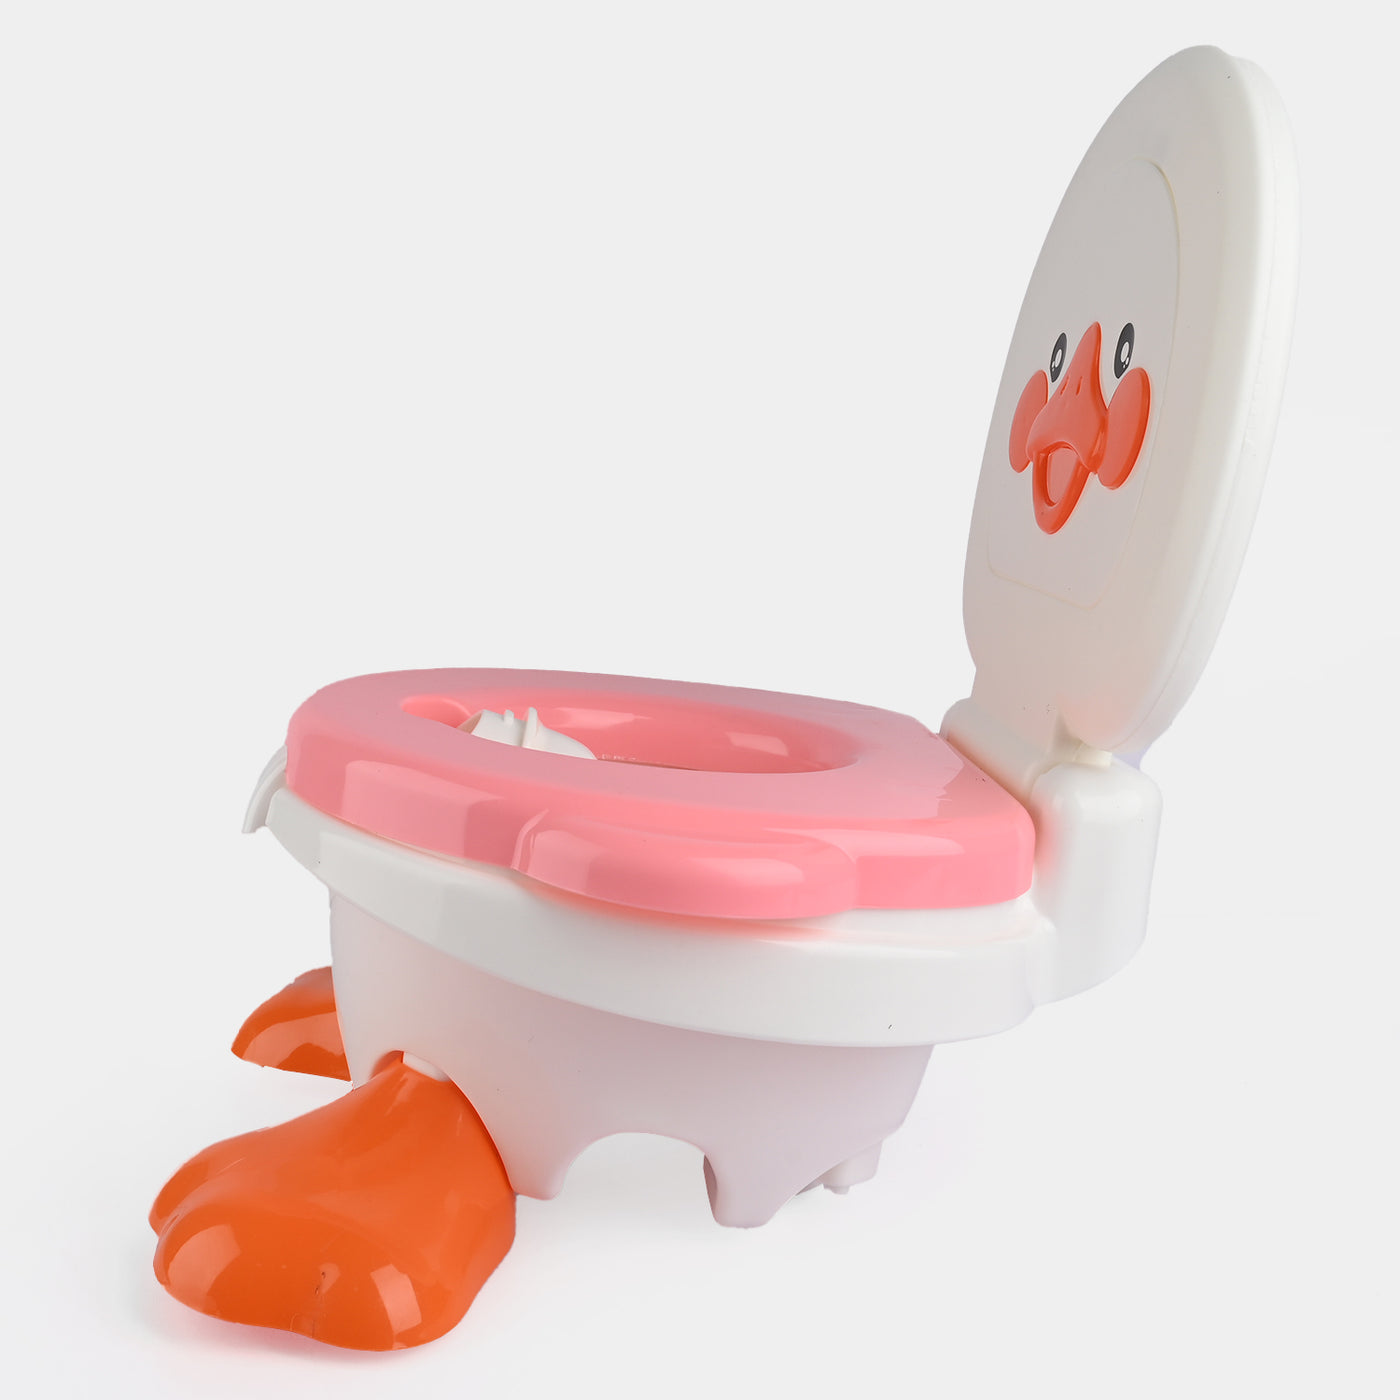 Baby Potty Seat Duck Design